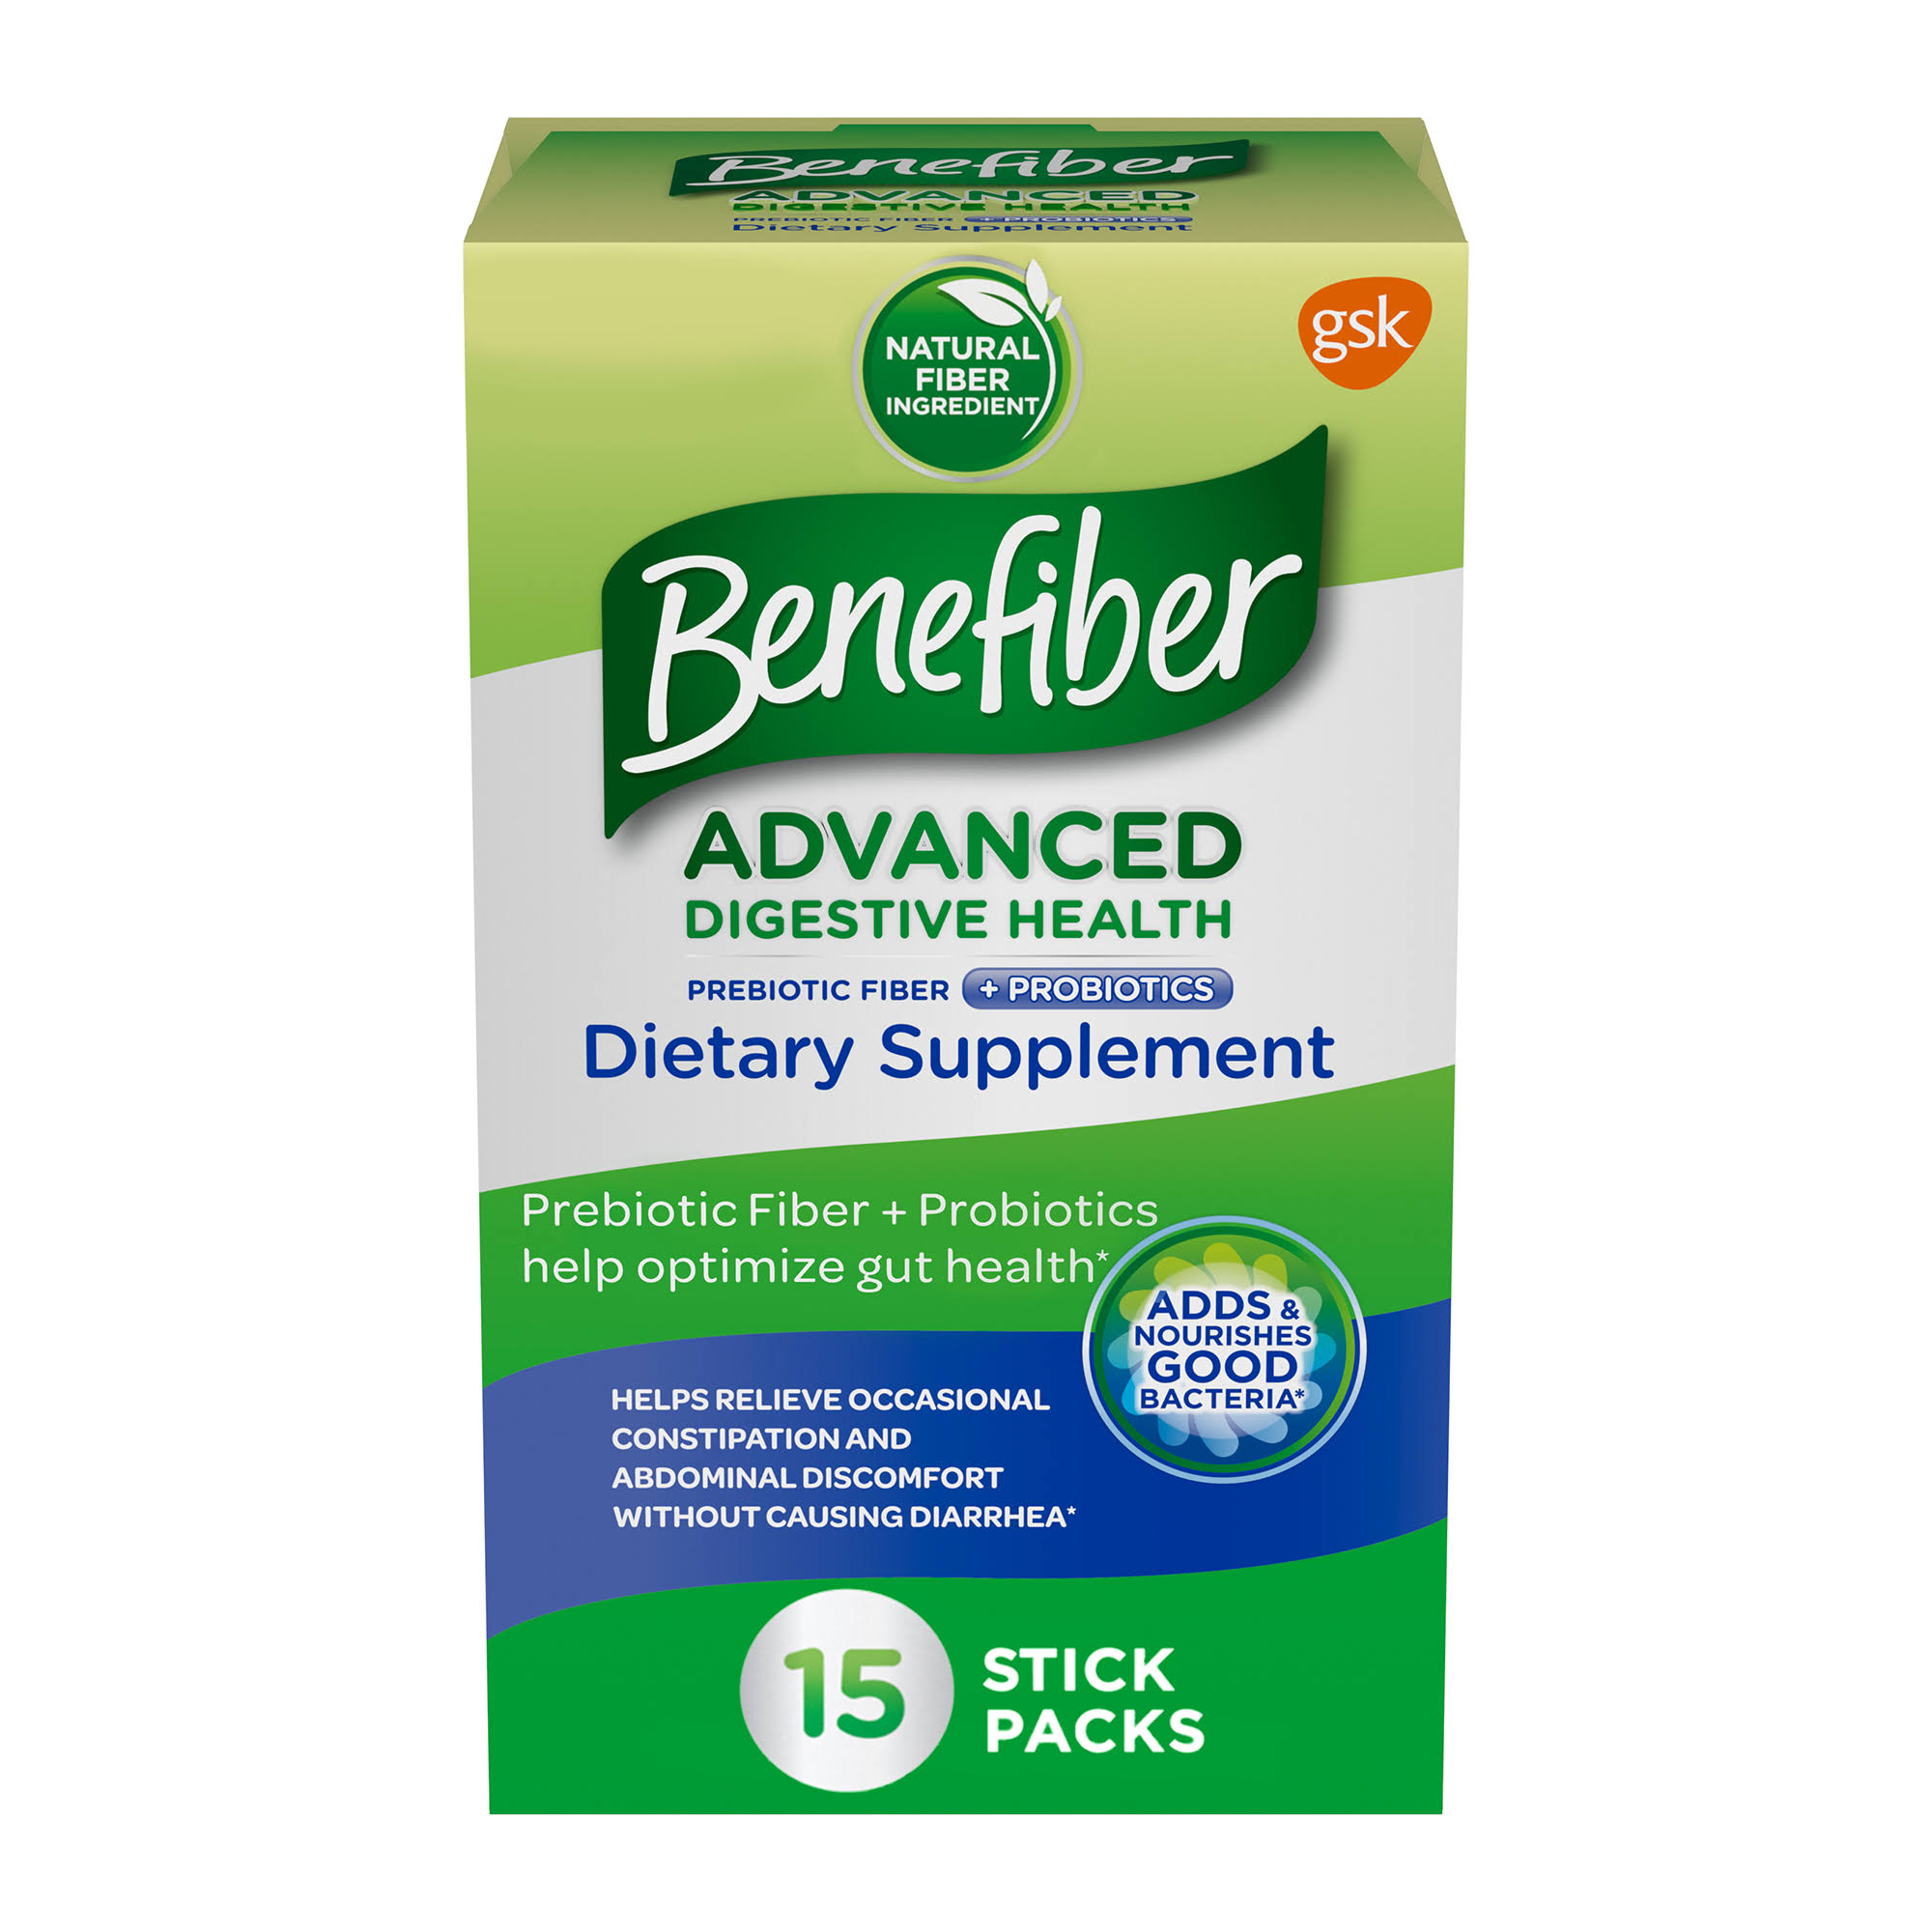 Benefiber Advanced Digestive Health Prebiotic Fiber Supplement Powder with Probiotics - 15 ct